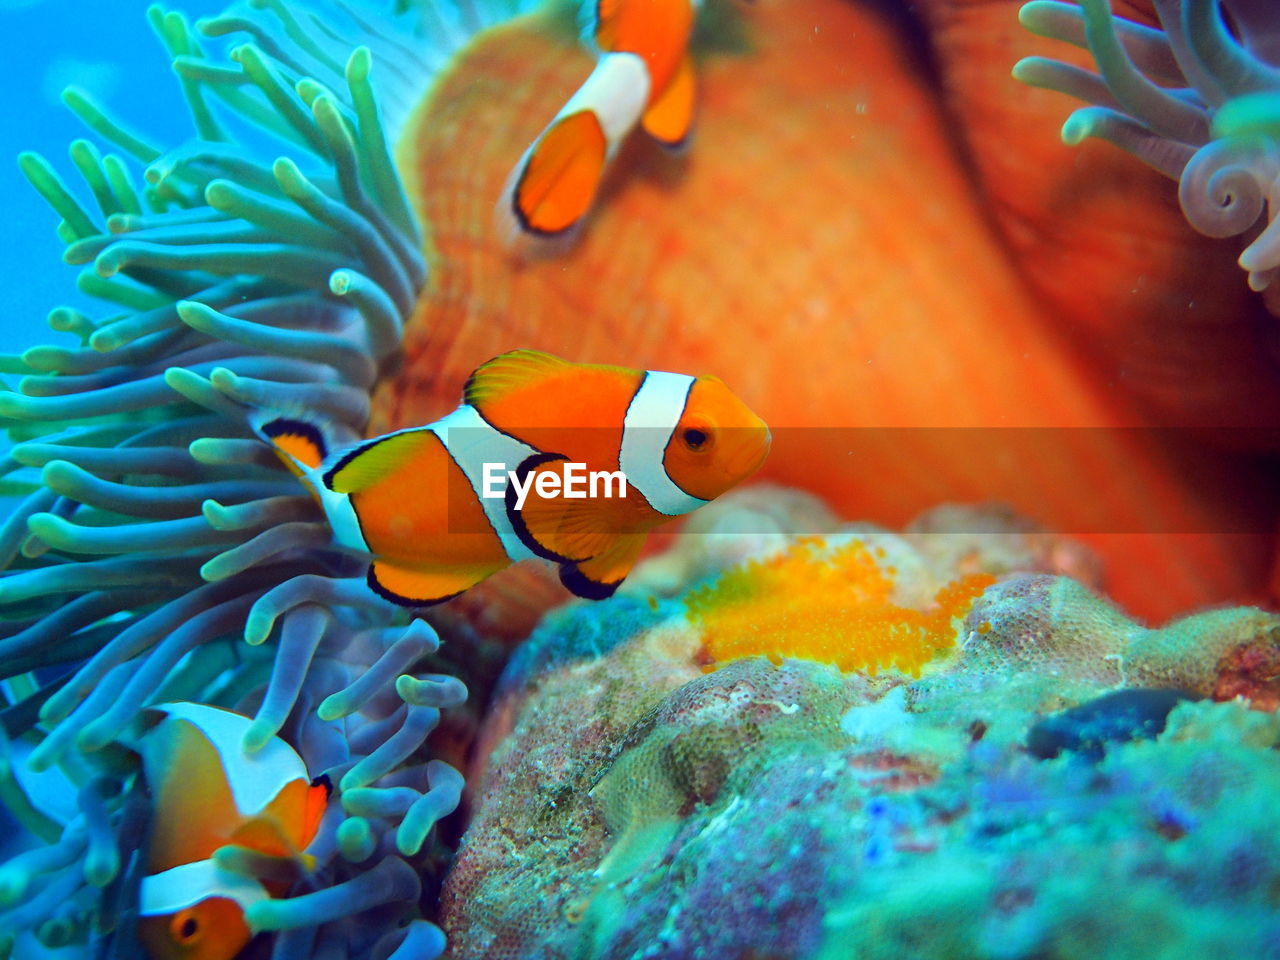 Clownfish near anemone at raja ampat